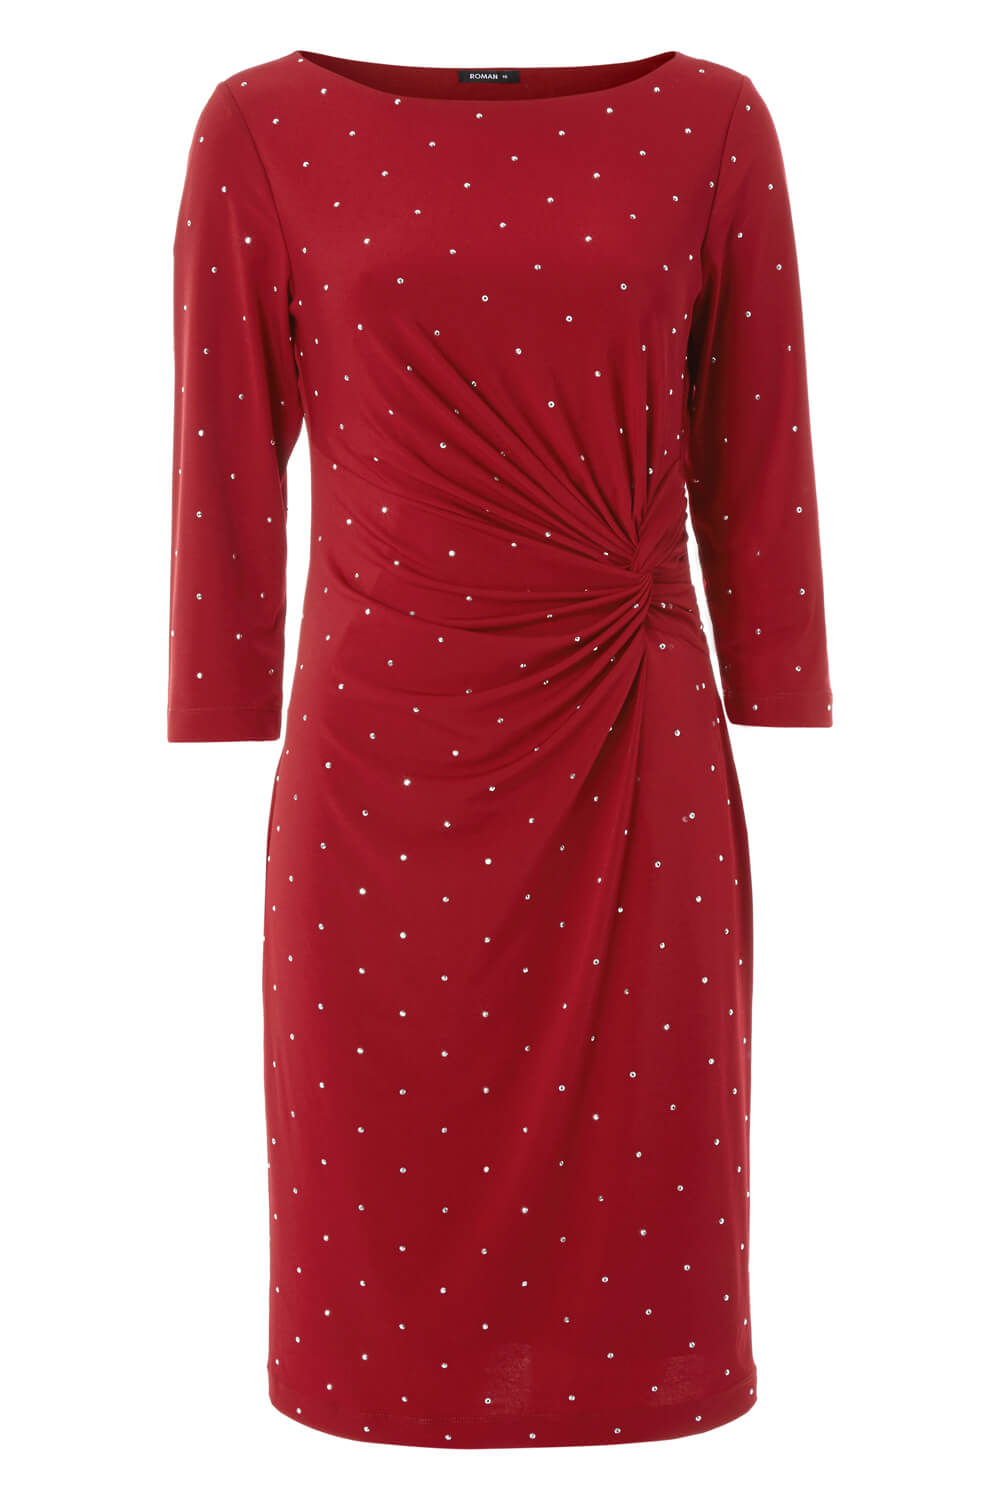 Red Embellished Twist Waist Dress, Image 5 of 5